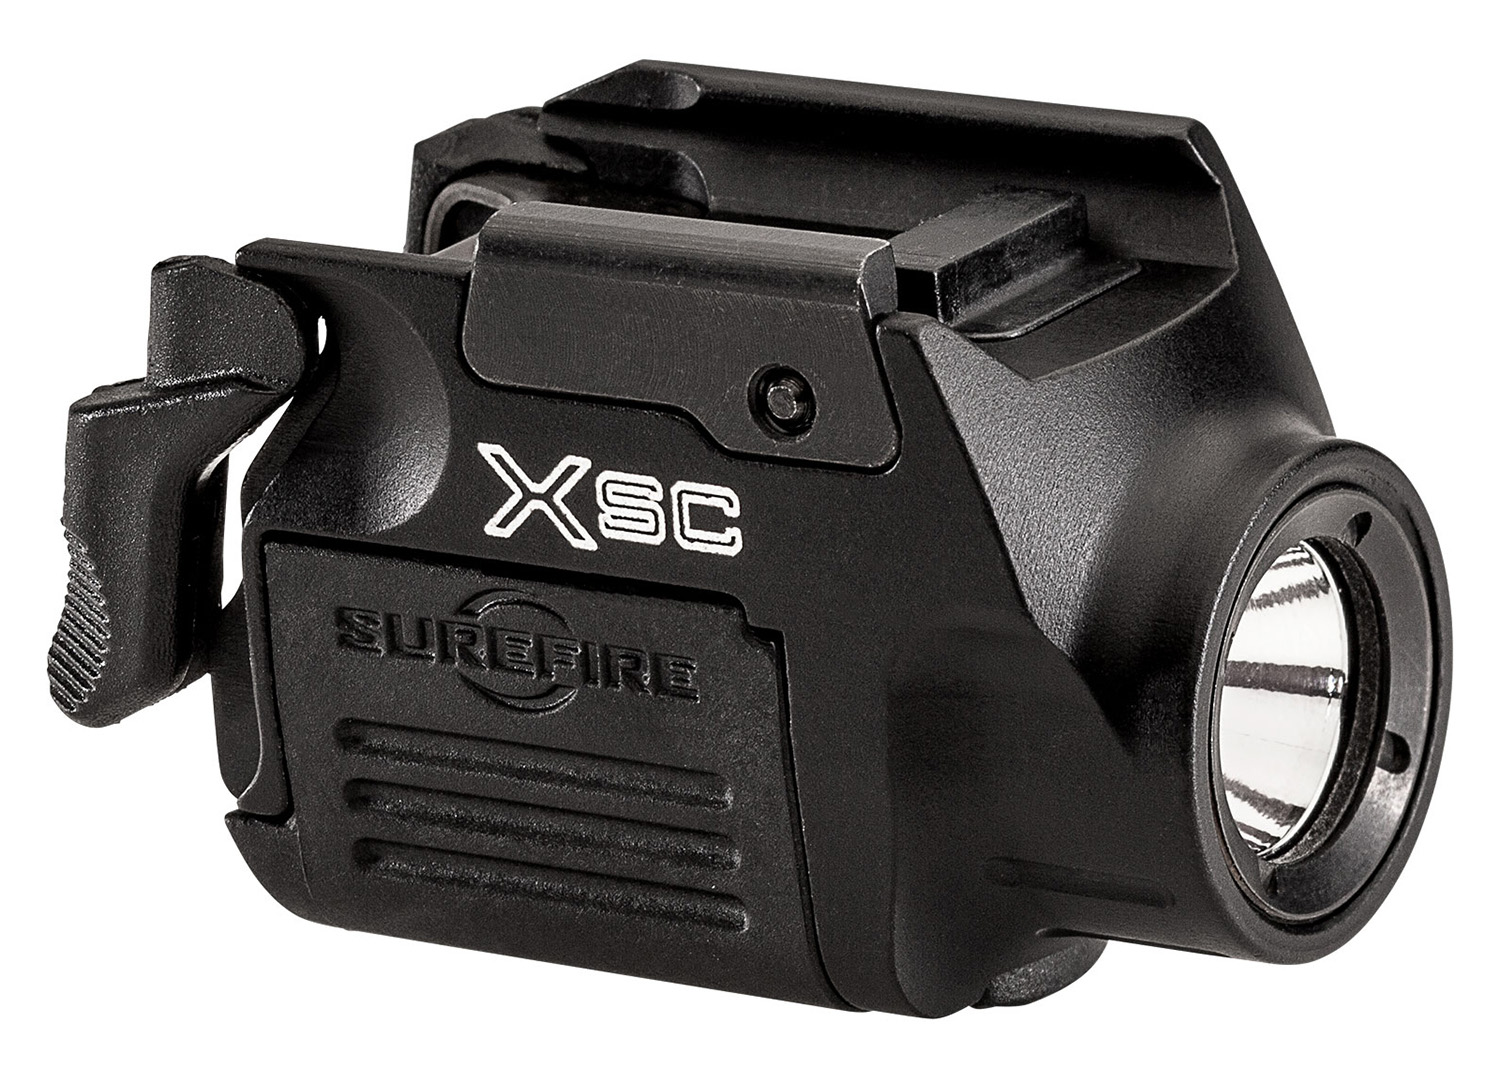 SureFire XSCA XCS Weapon Light XSC Fits Glock 43x/48 350 Lumens Output White 90 Meters Beam Black Anodized Aluminum